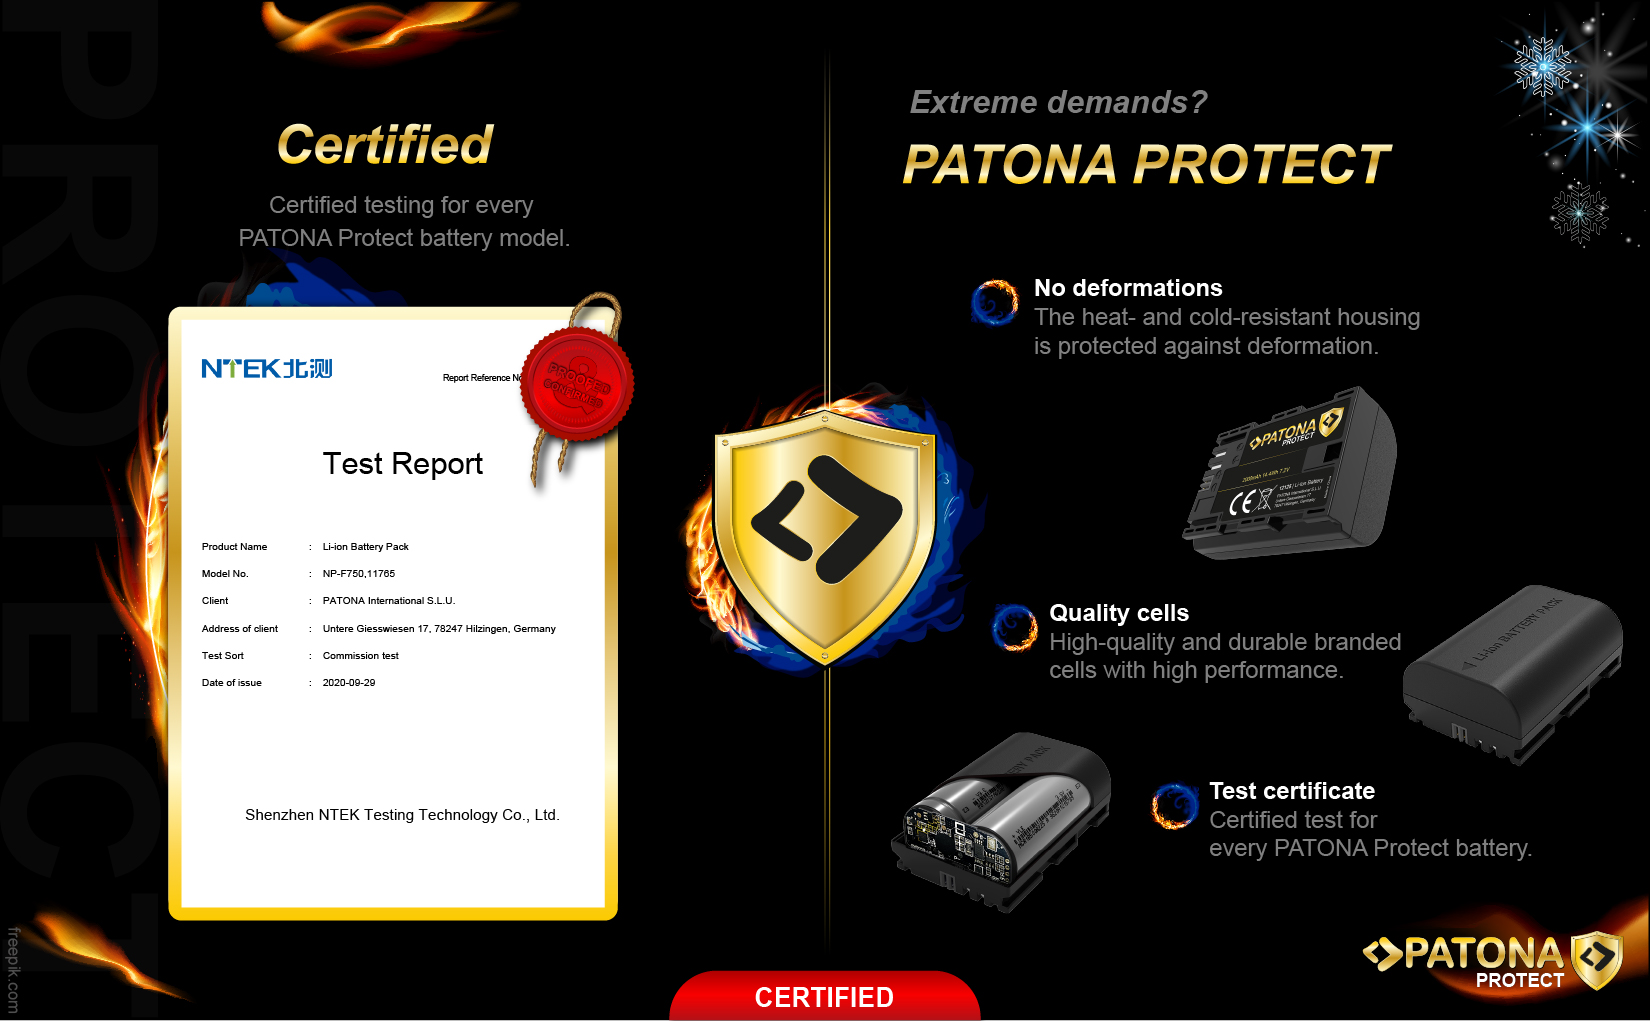 PATONA PROTECT Battery f. Nikon Z9 D6 EN-EL18D with high quality LG cells